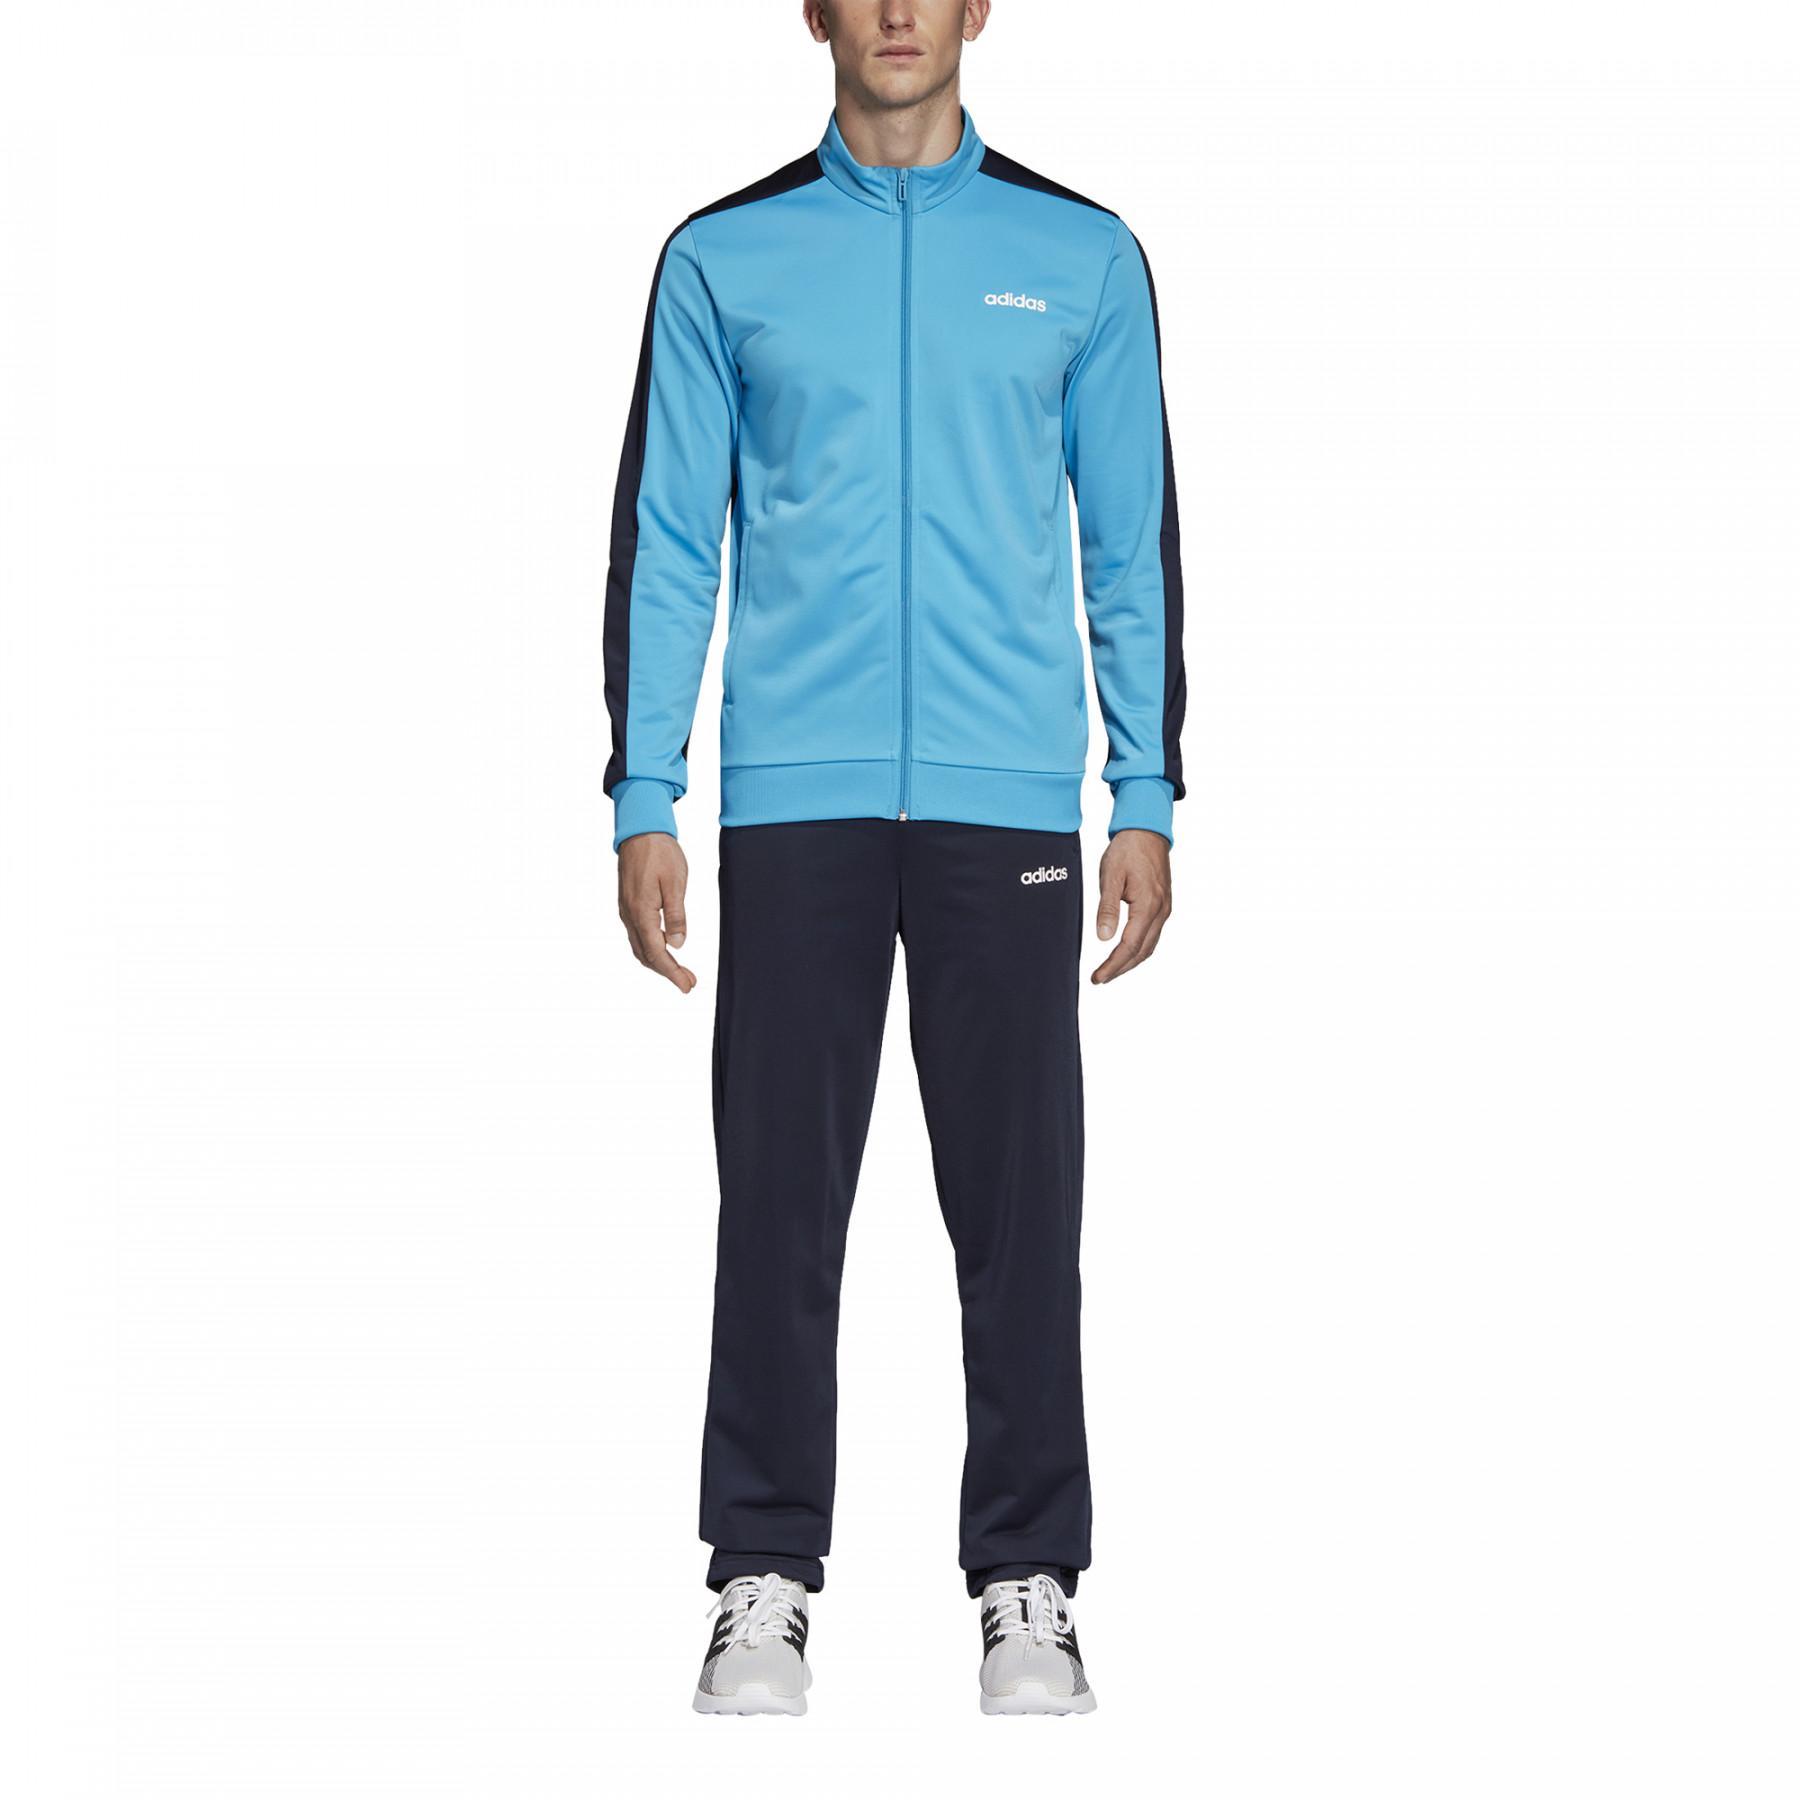 Tracksuit adidas Basics - Jackets and tracksuits - Textile - Handball wear